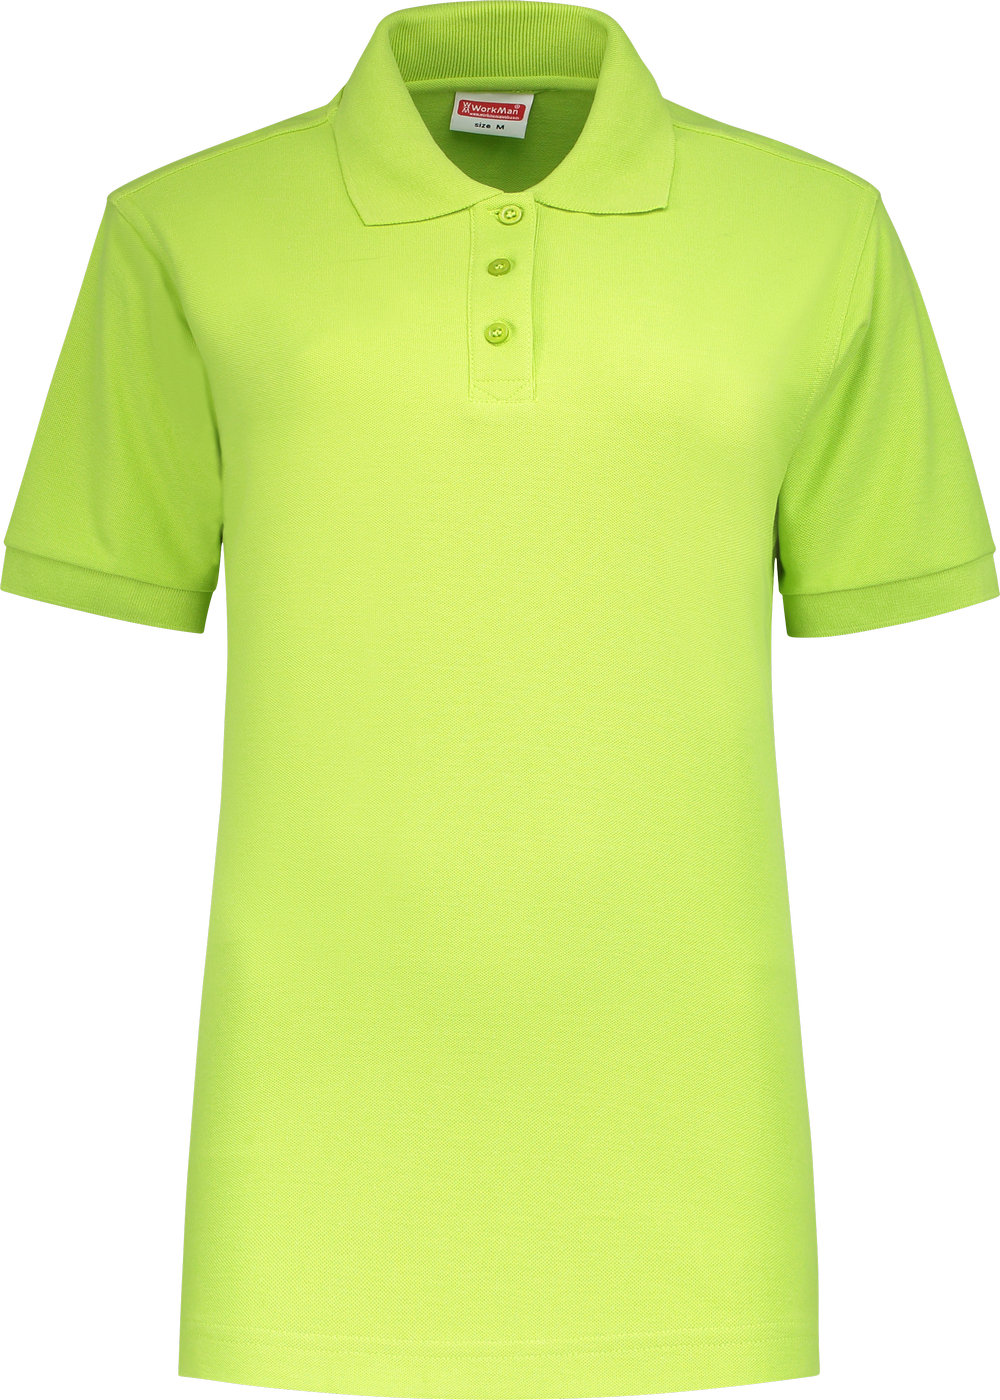 81191 Poloshirt Ladies Lime Green